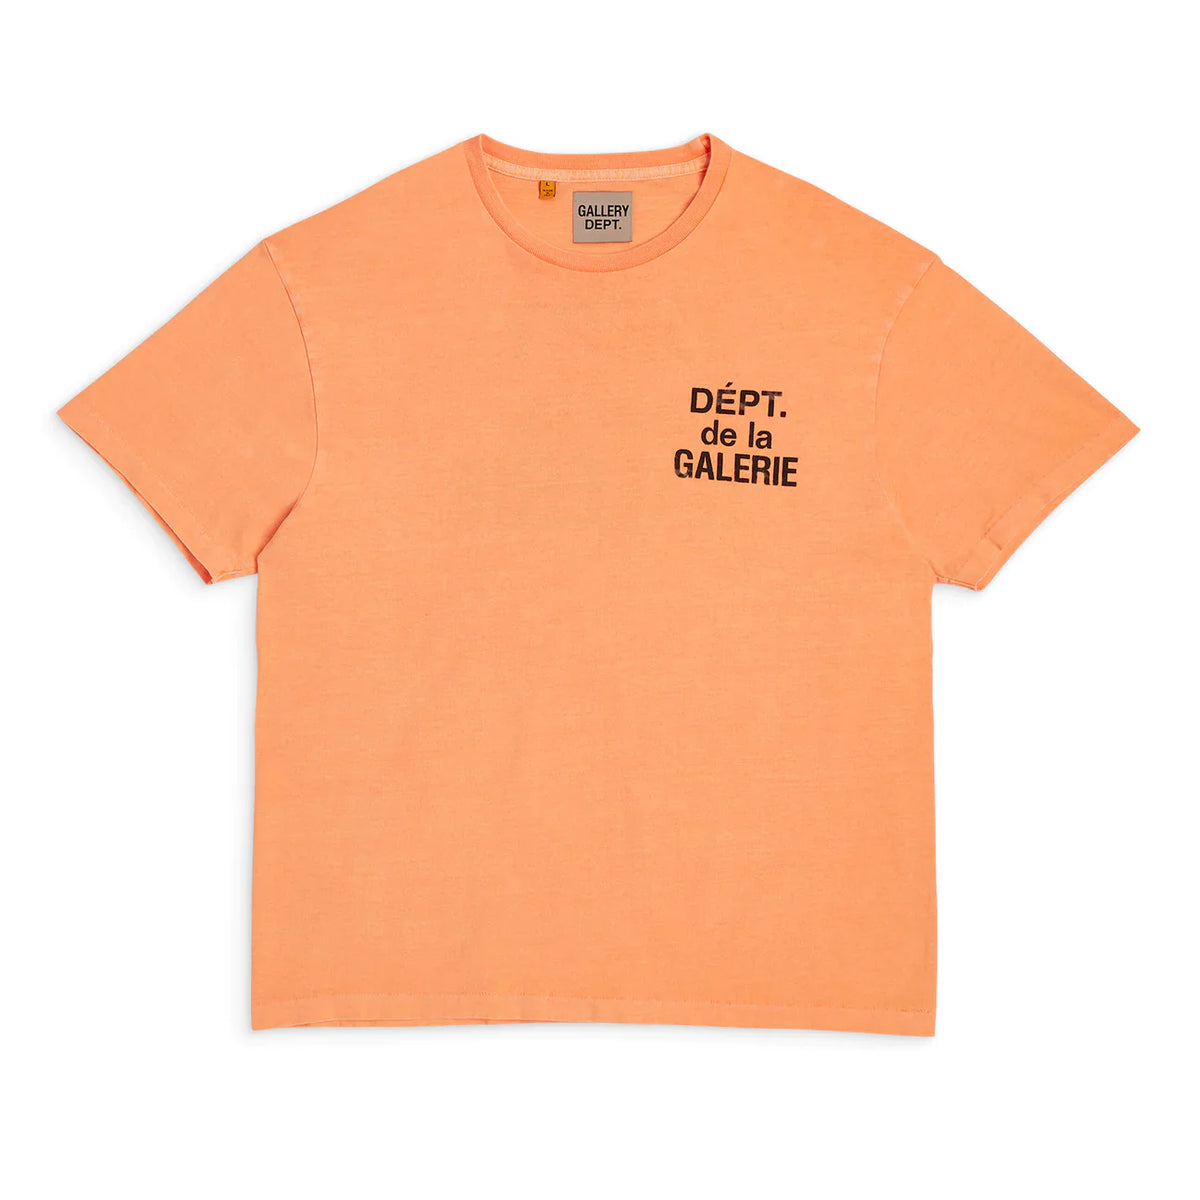 Gallery Dept. French Souvenir T-Shirt Orange